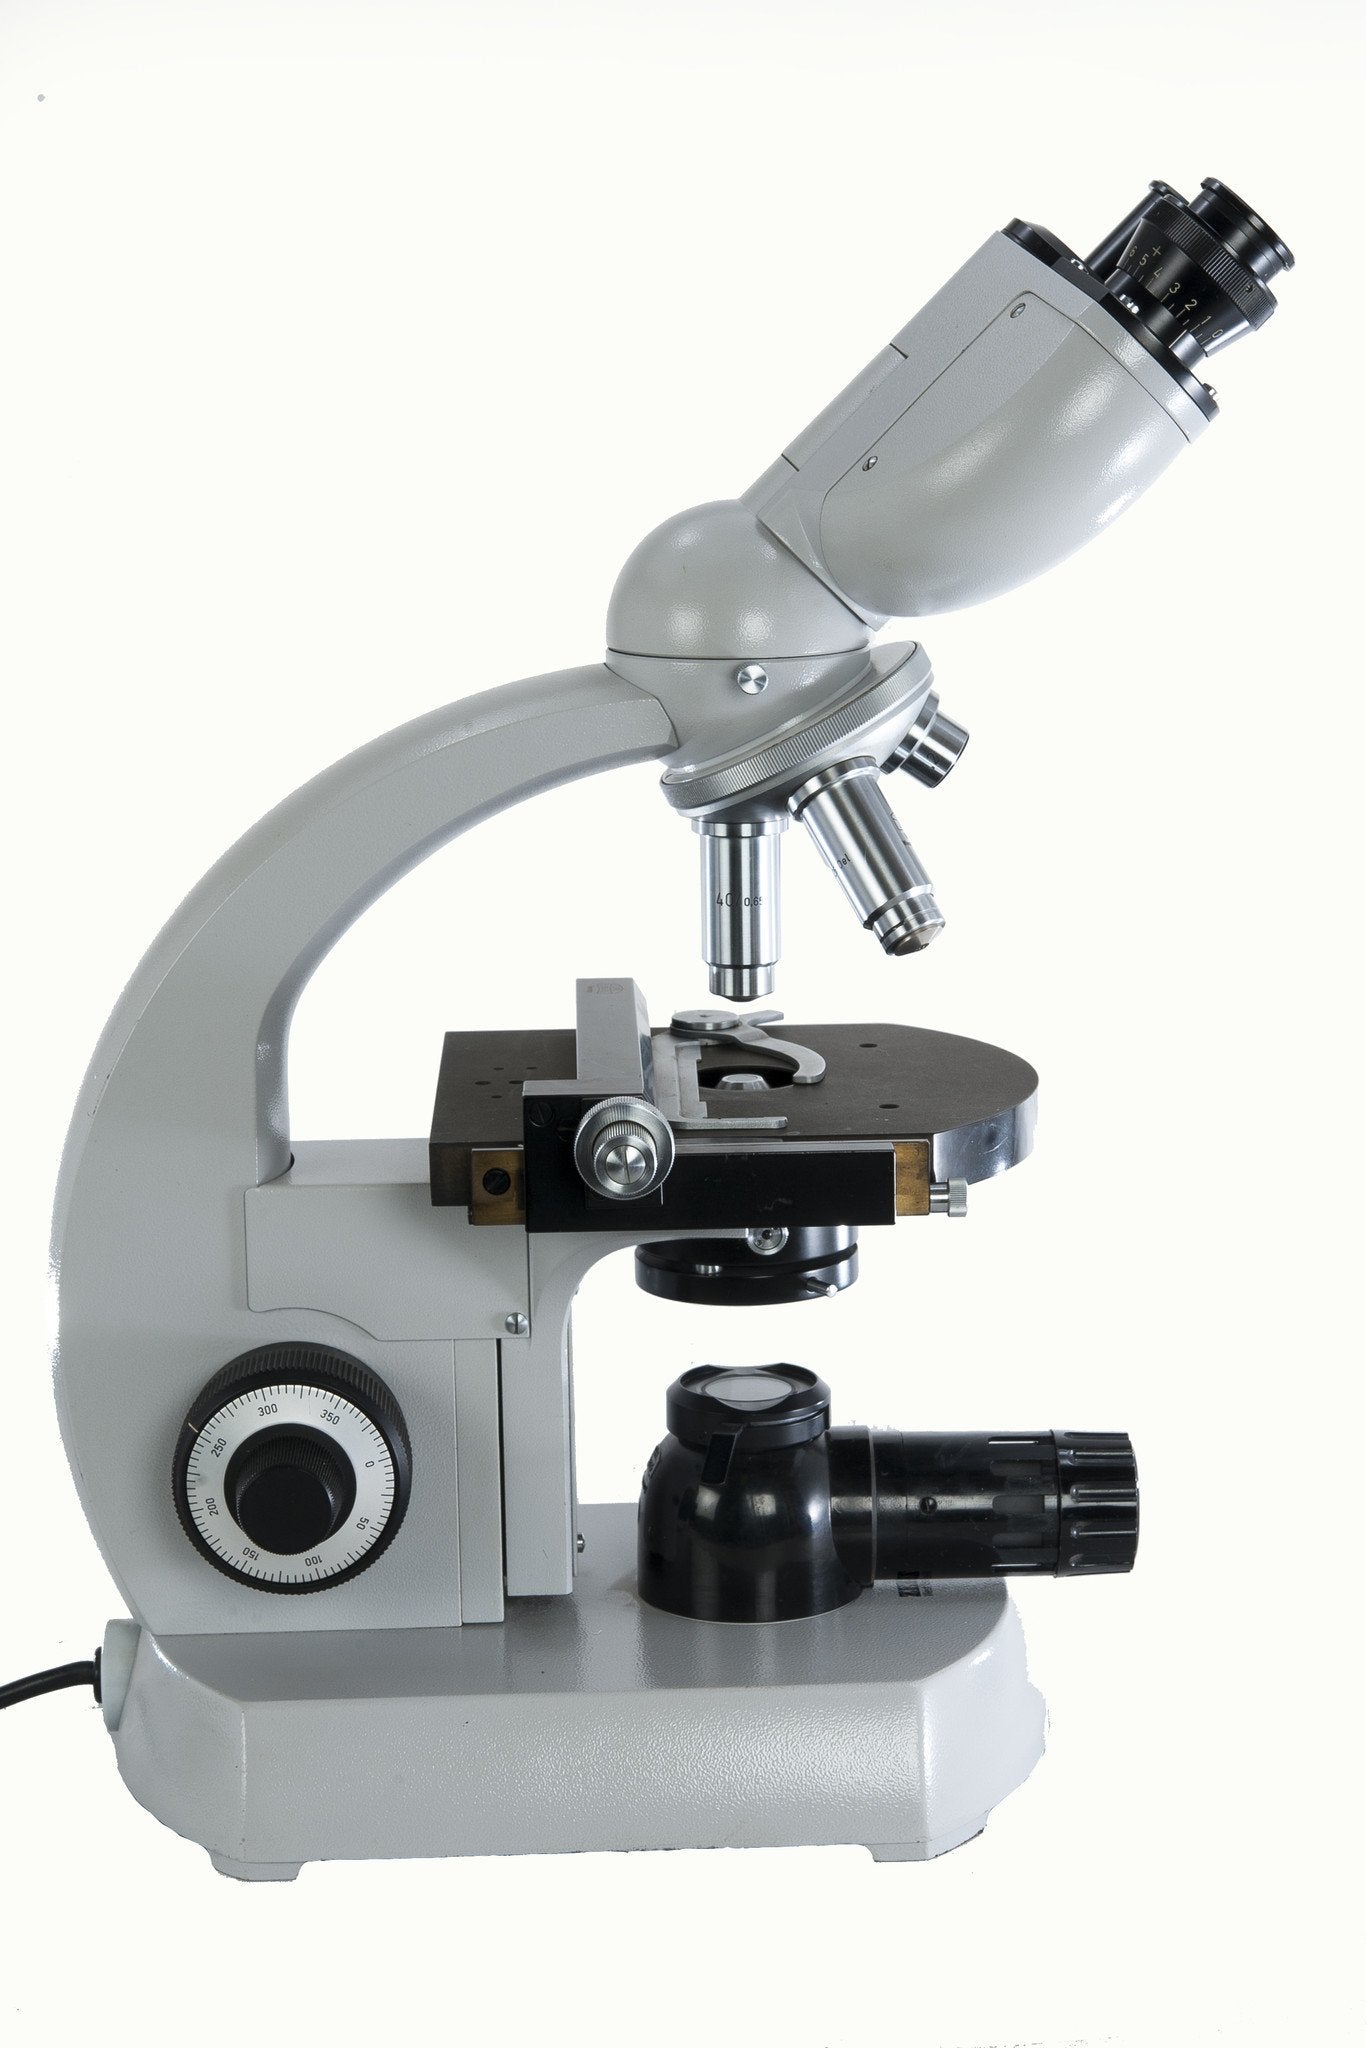 Carl Zeiss Standard Binocular Microscope - Microscope Central
 - 4